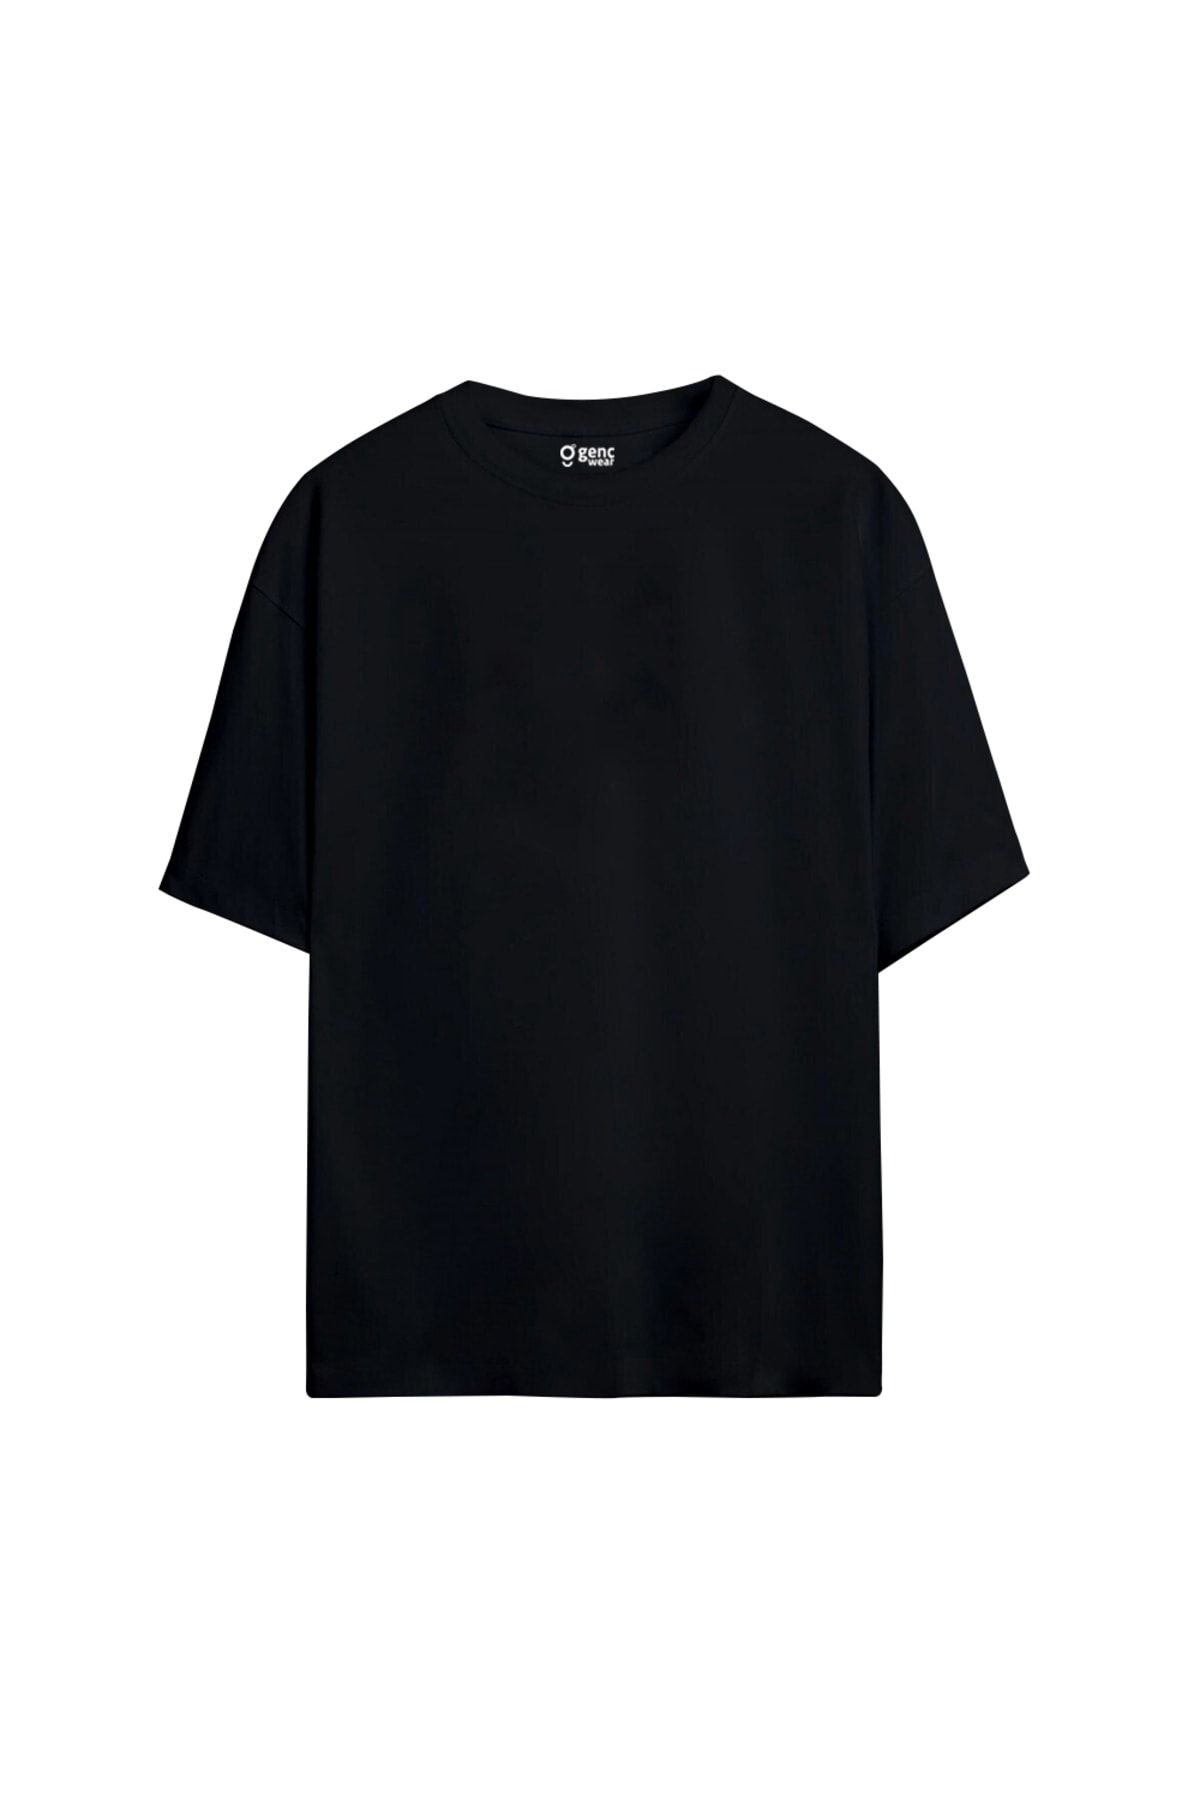 Gençwear Unisex Black Basic Oversize T-shirt - Trendyol